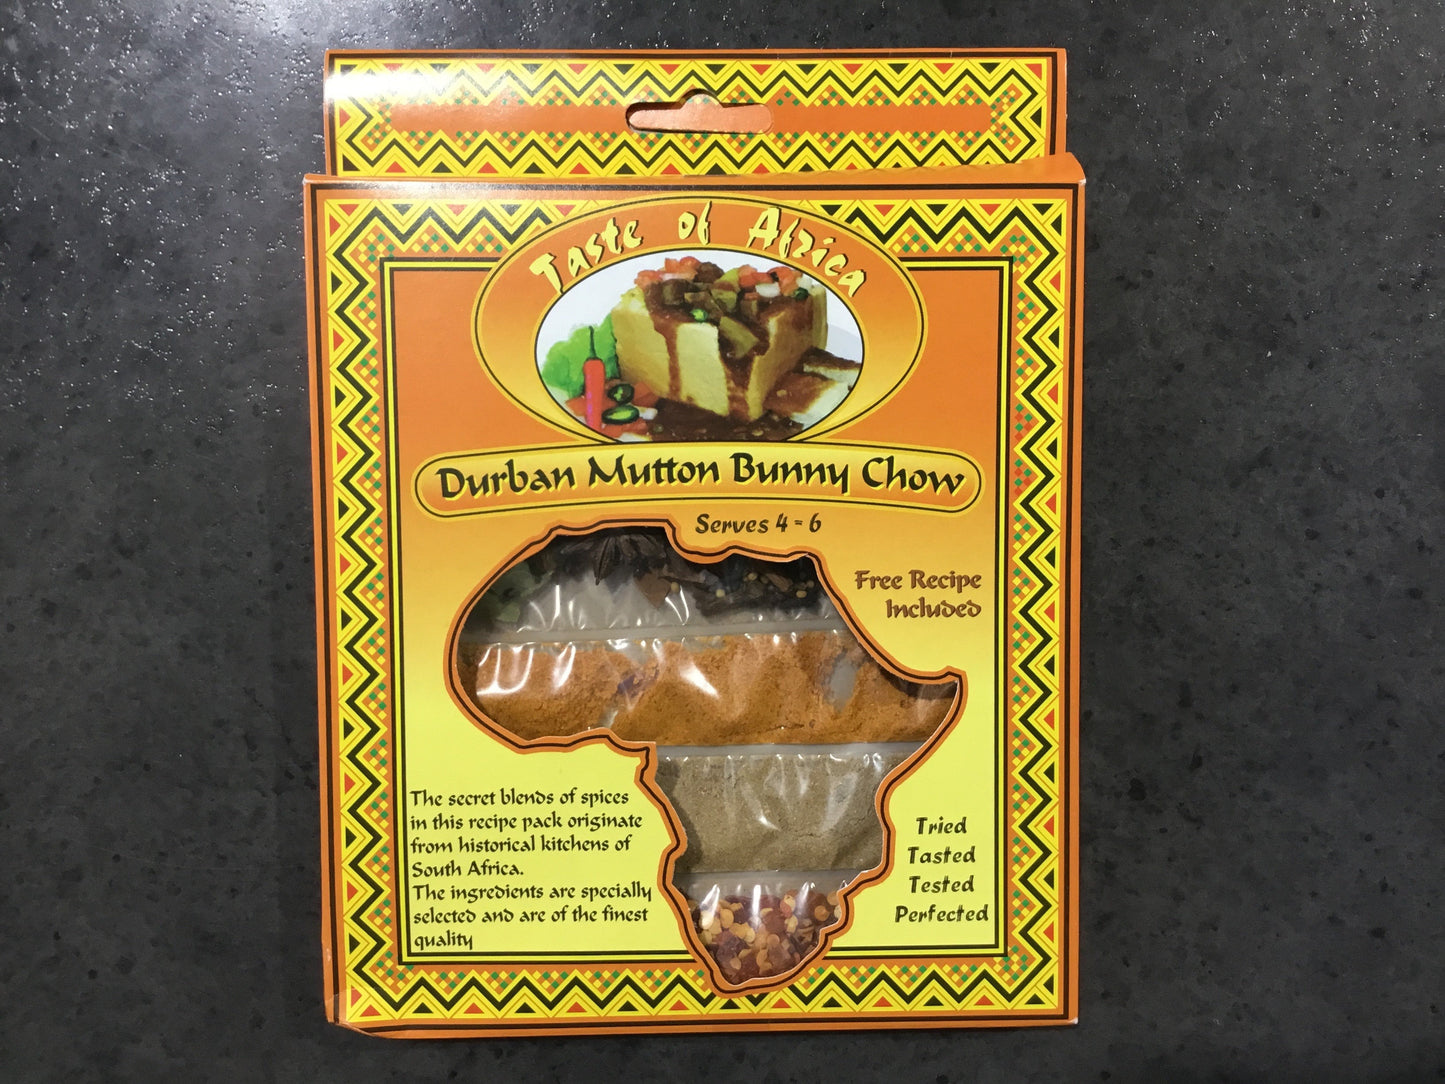 Taste of Africa Durban Mutton Bunny Chow